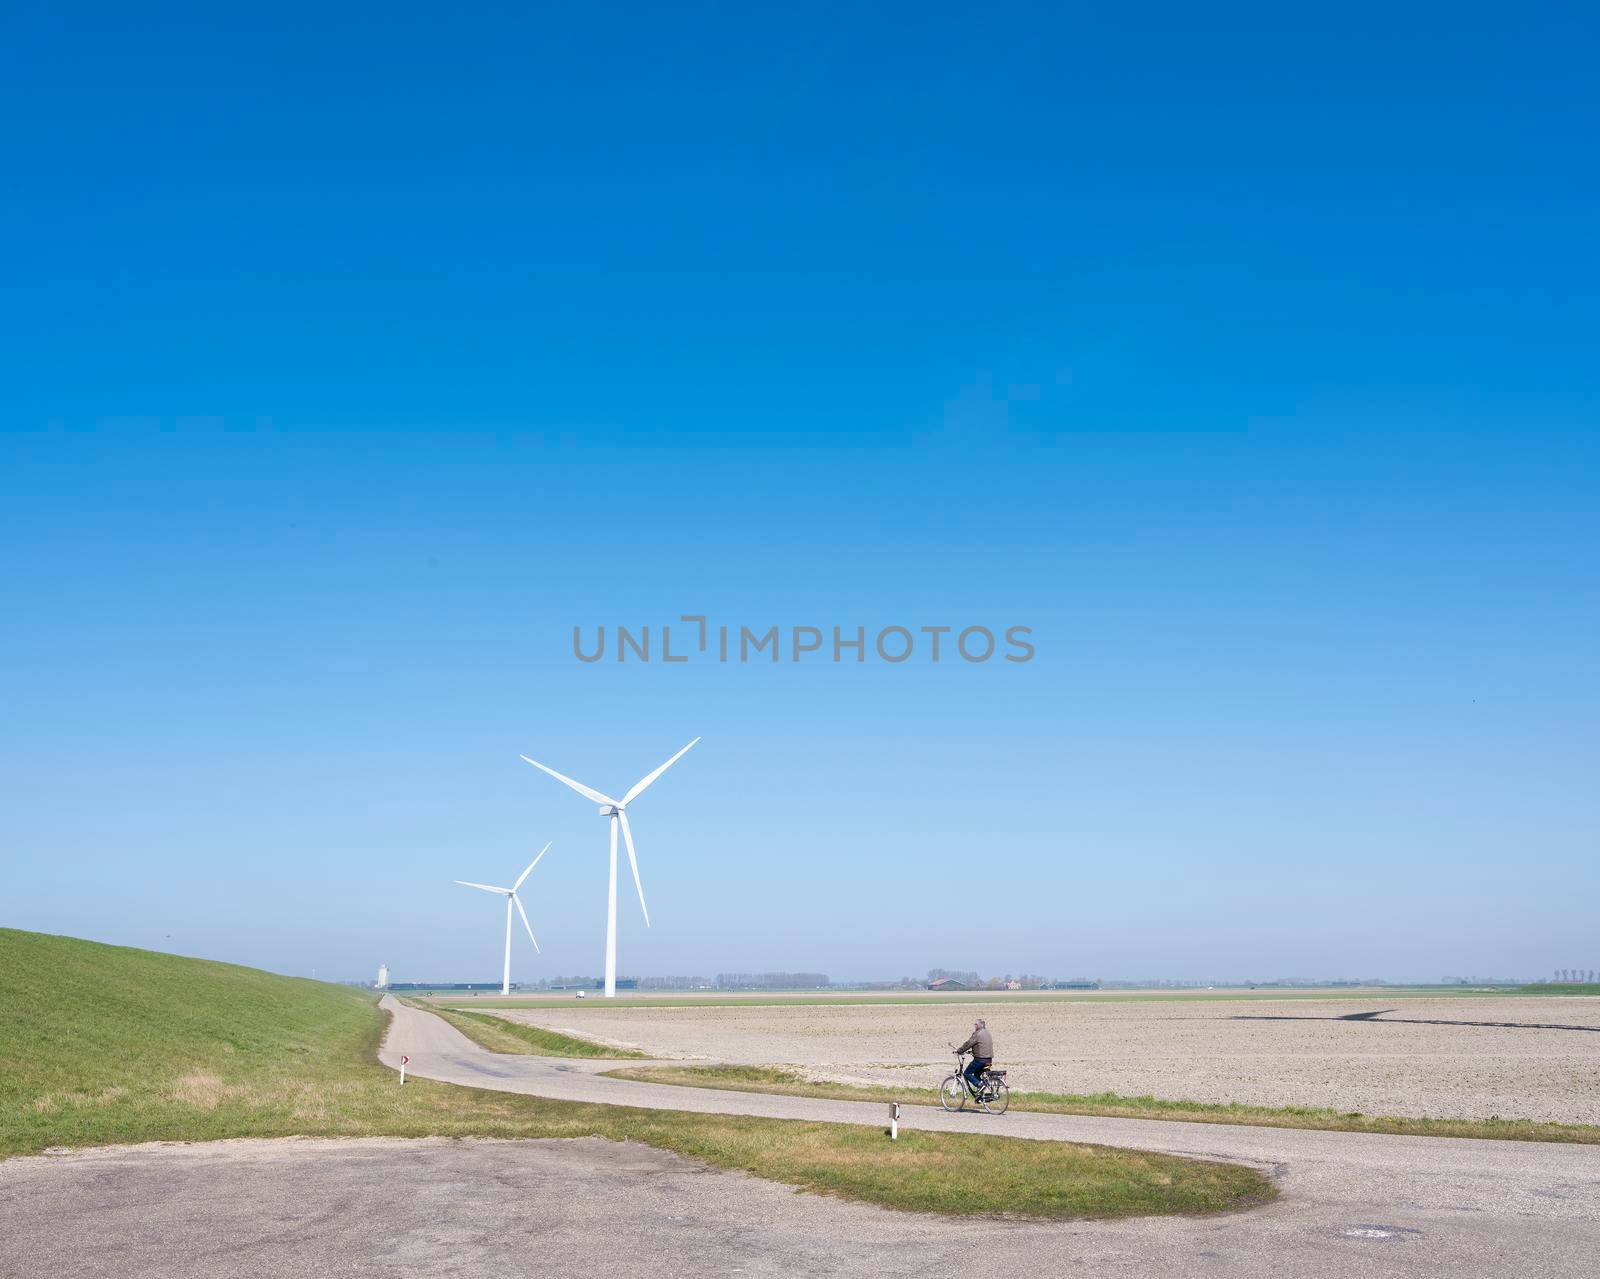 zierikzee, netherlands, 30 march 2021: man on bicycle and wind turbines in rural landscape of schouwen duiveland in dutch province of zeeland under blue sky